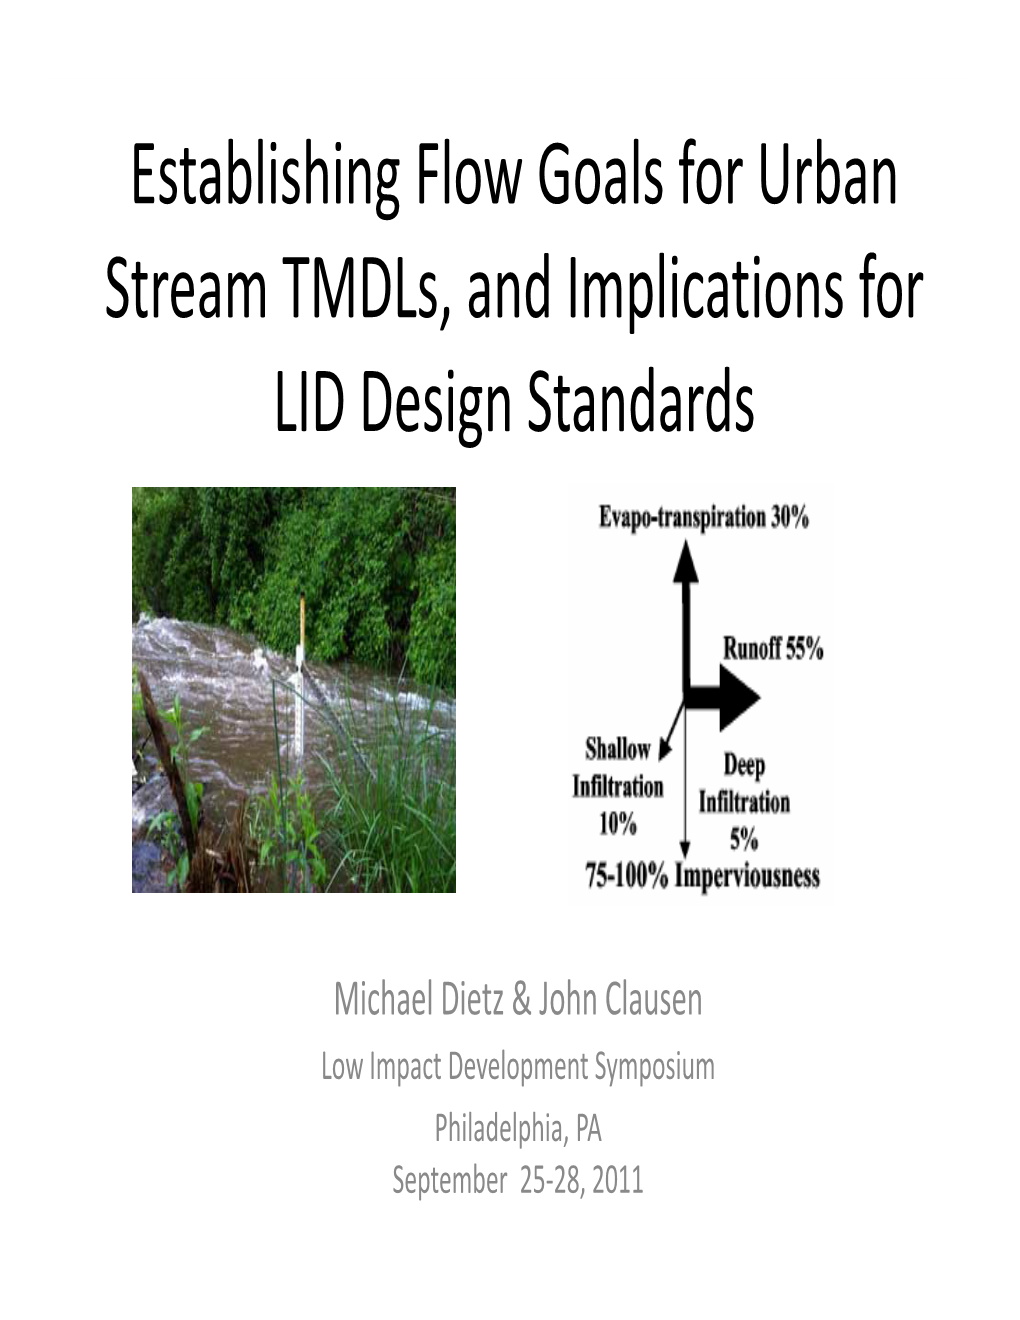 Establishing Flow Goals for Urban Stream Tmdls, and Implications for LID Design Standards